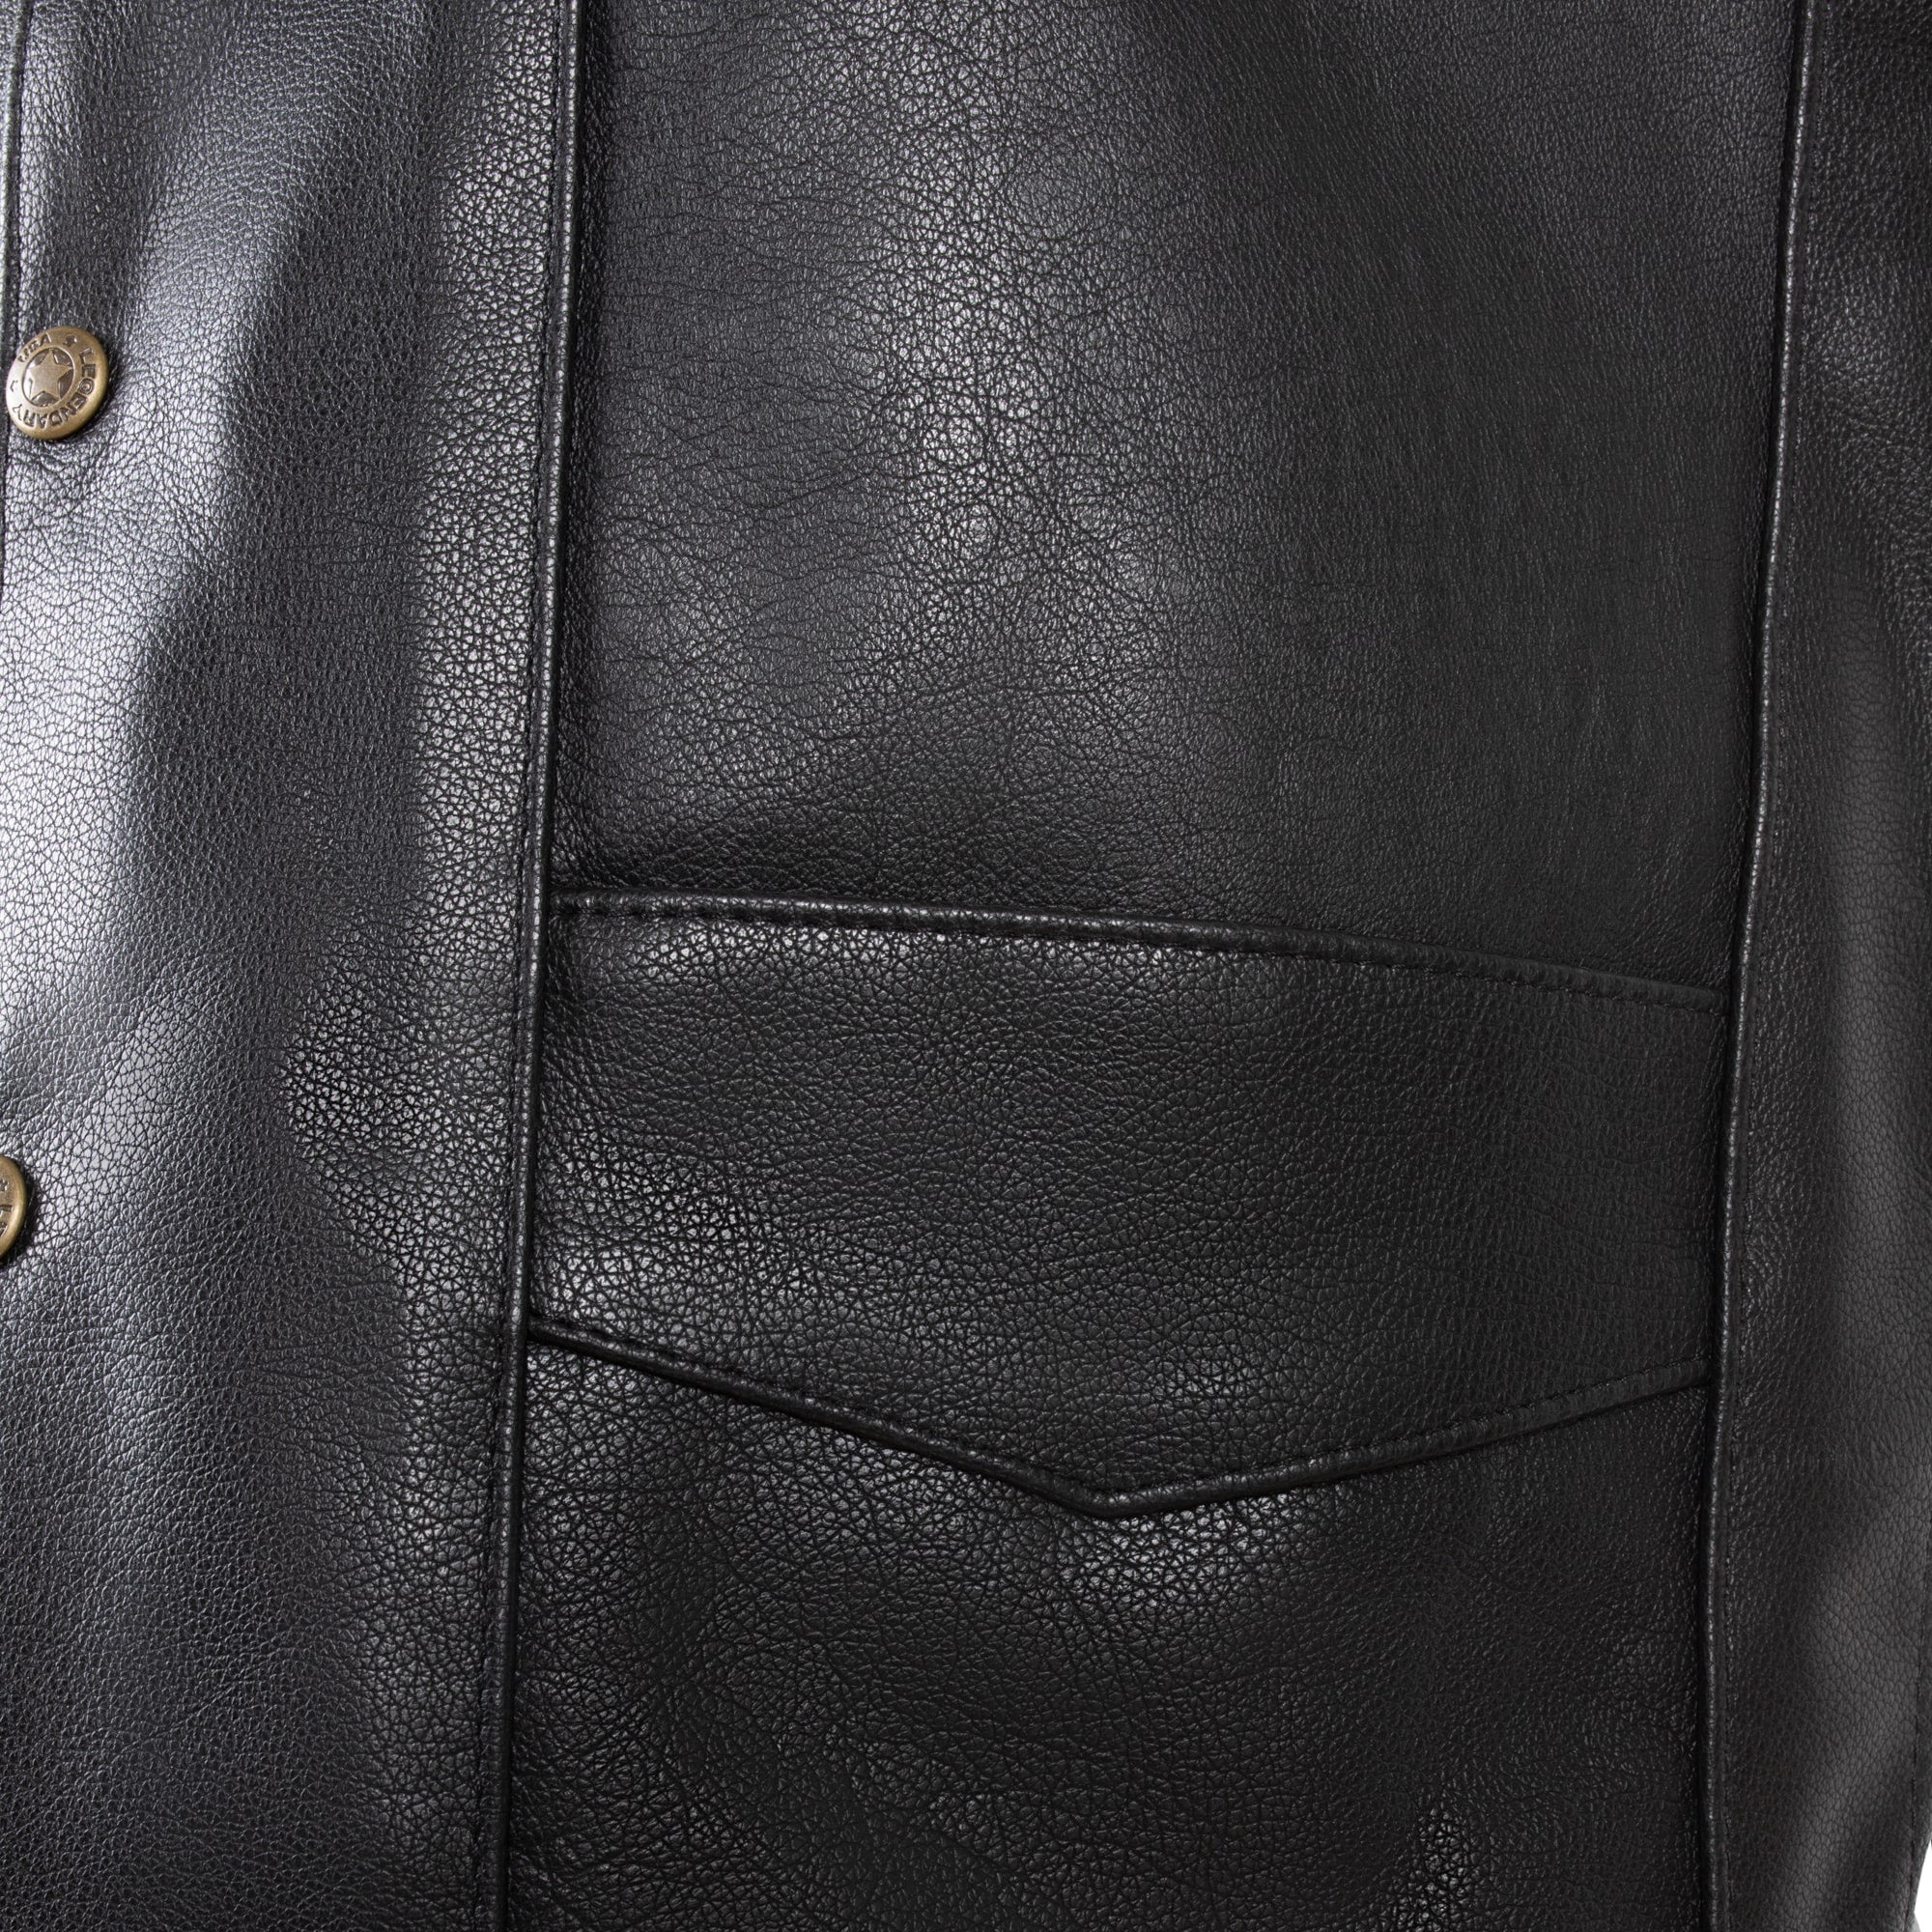 Daryl Dixon Motorcycle Vest | Mens Cowhide Leather Riding Vest ...